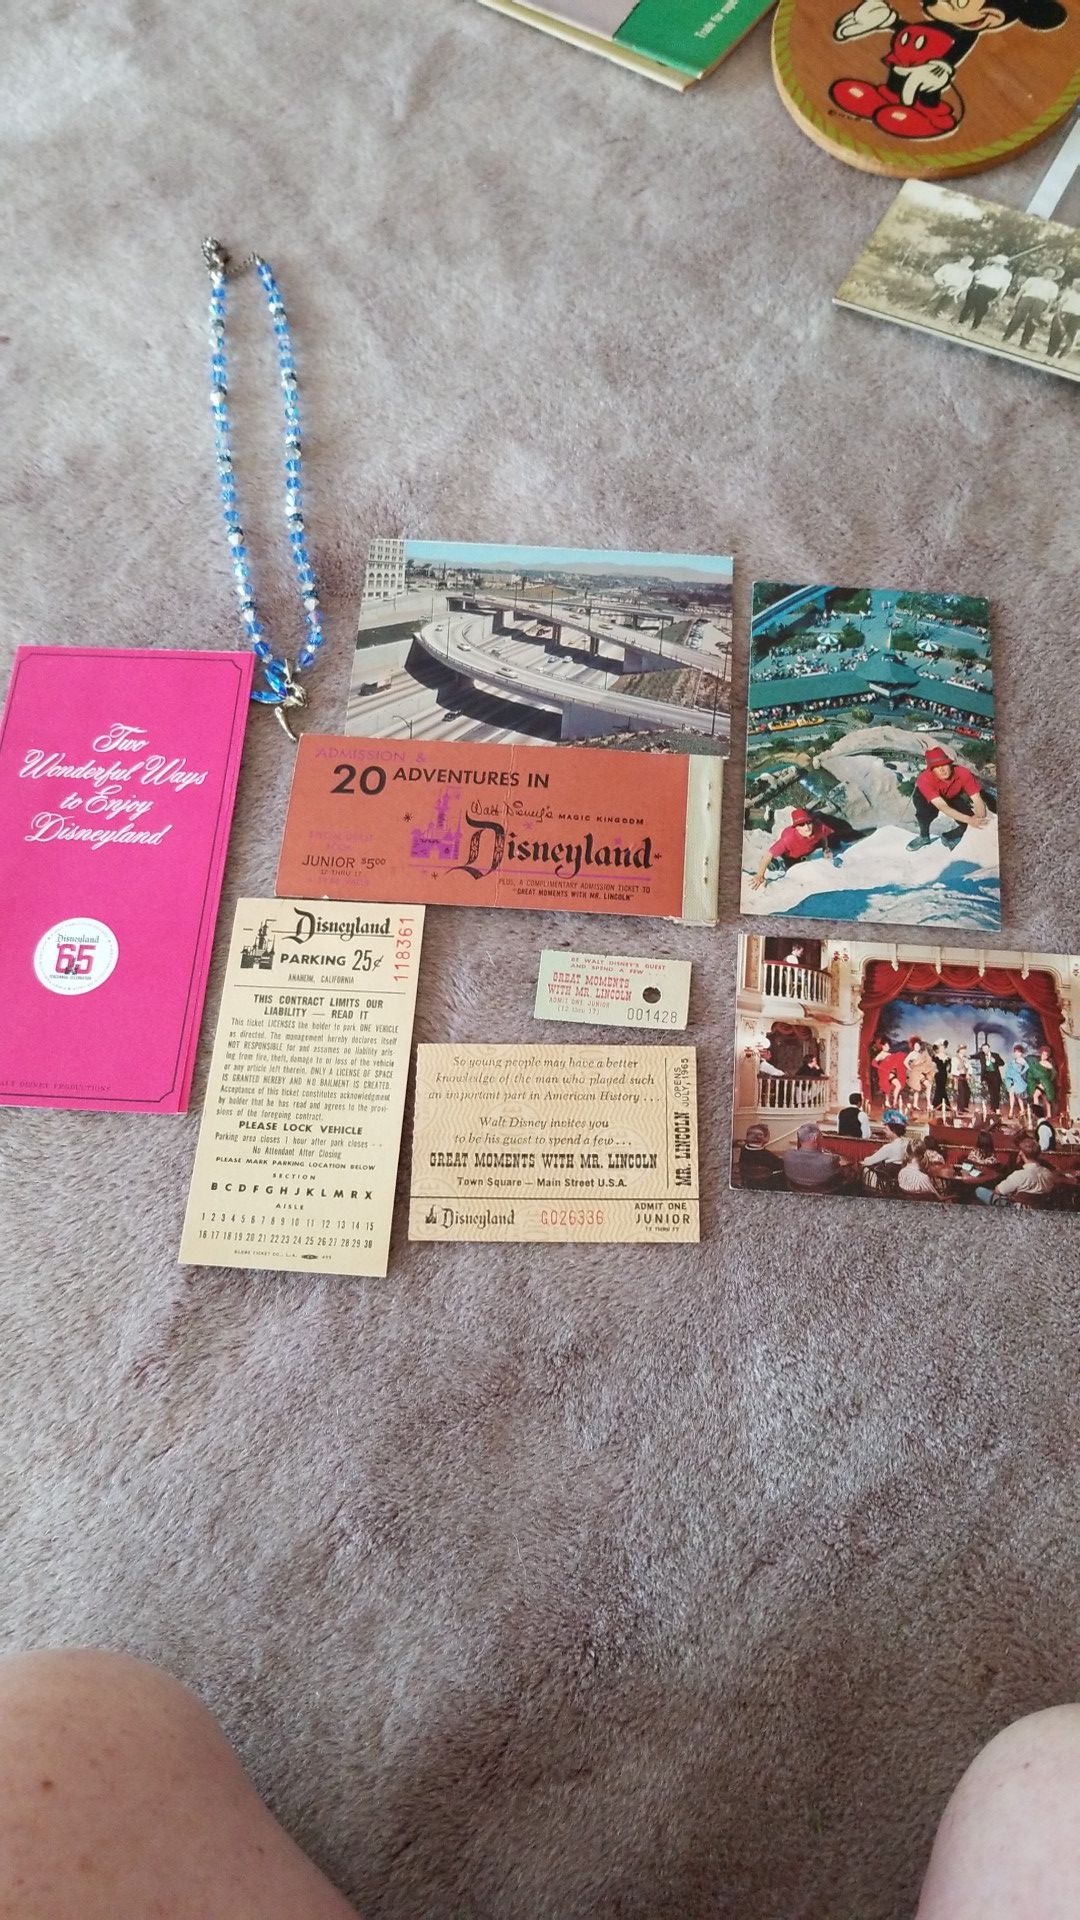 1965 trip to Disney Land memorabillia